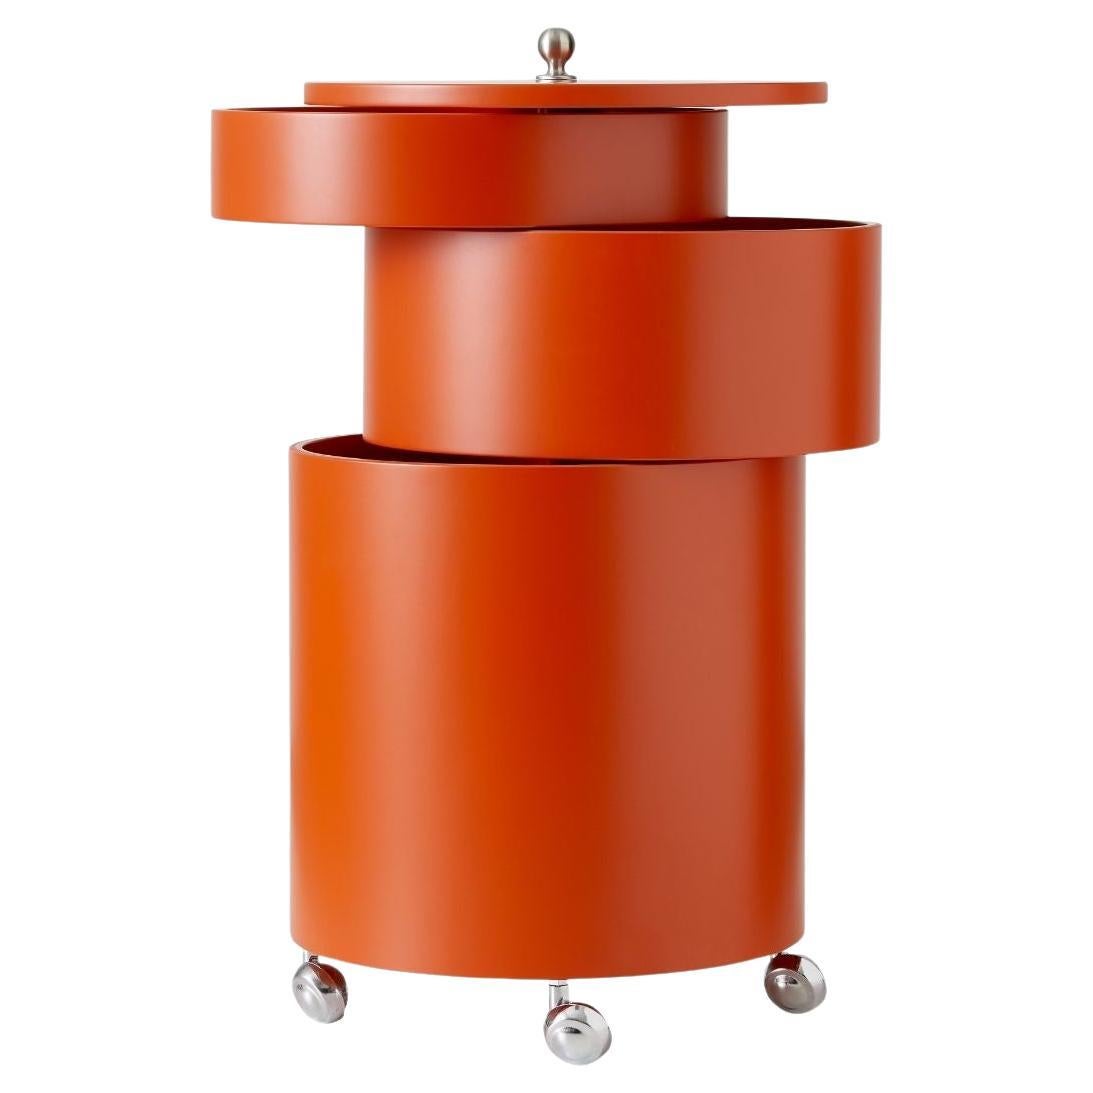 Verner Panton 'Barboy' Side Table and Storage Cabinet in Orange for Verpan For Sale